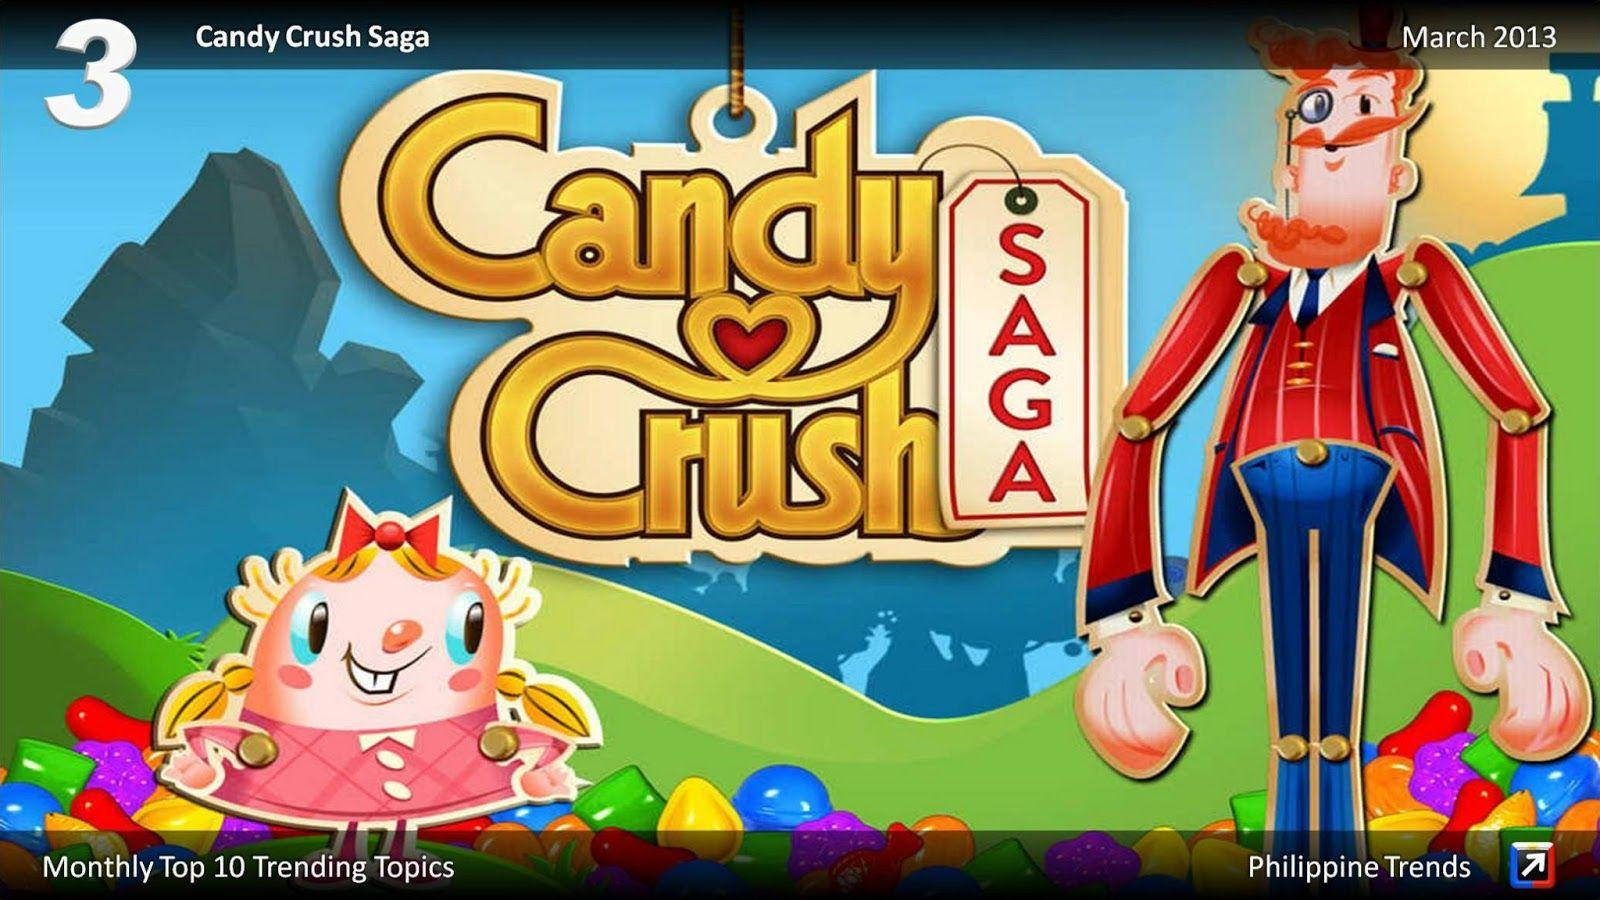 100+] Candy Crush Saga Backgrounds